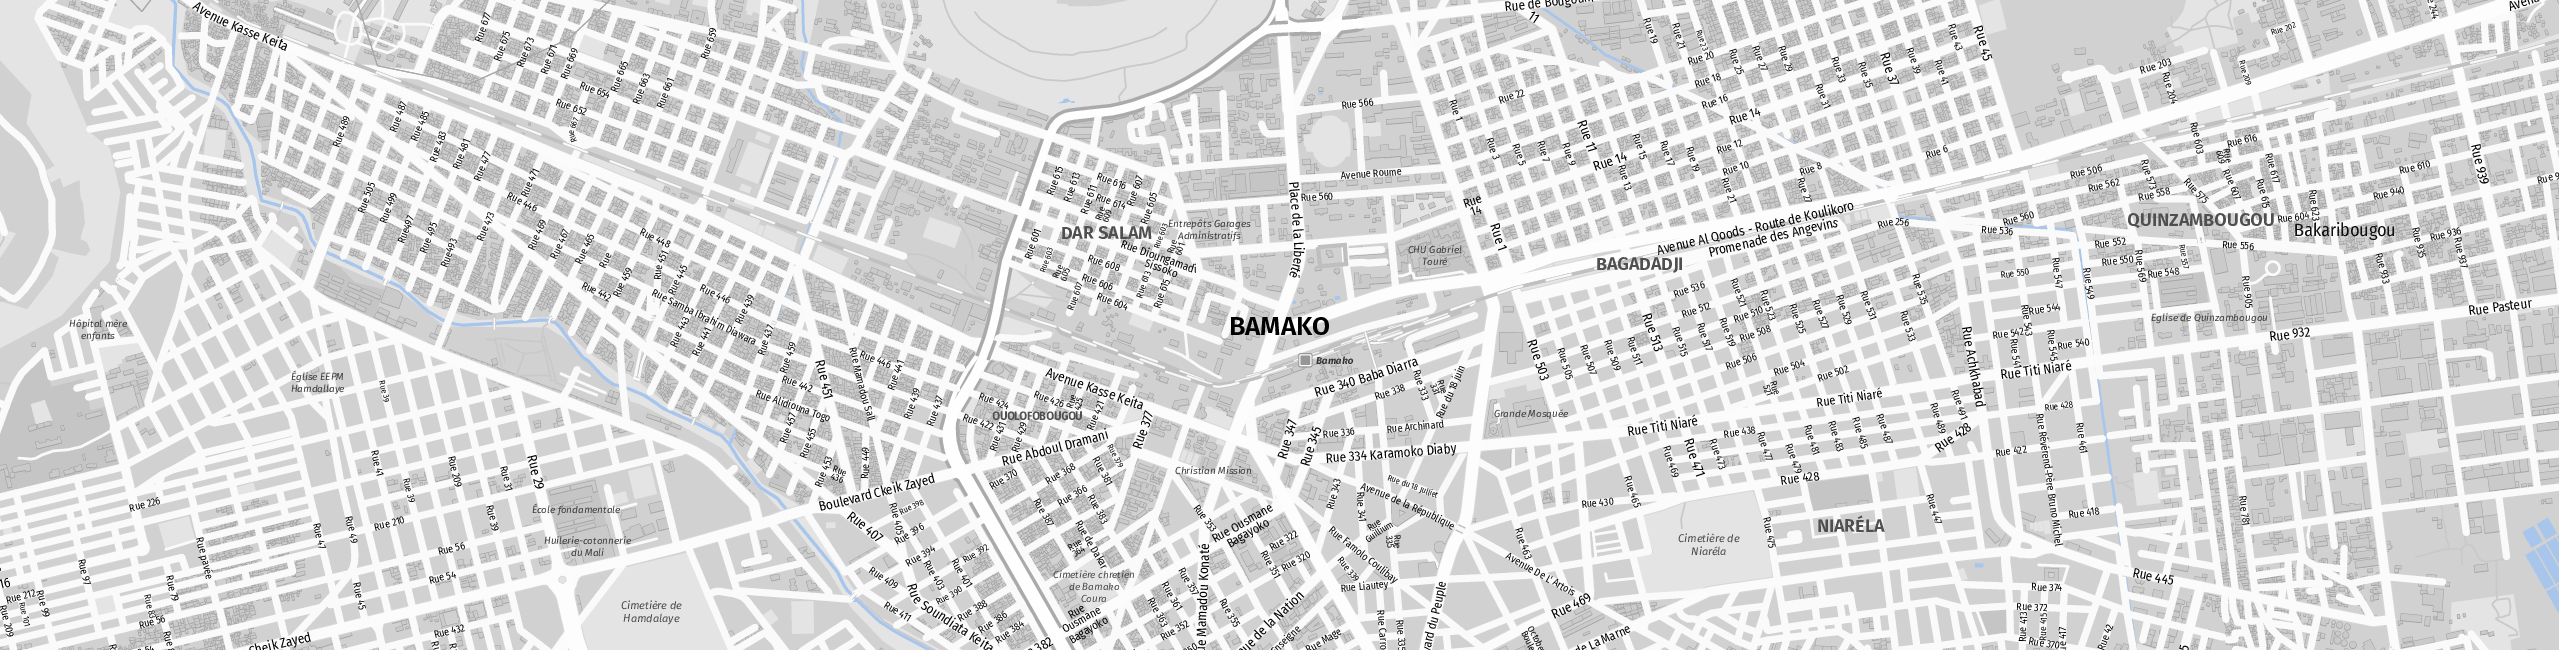 Stadtplan Bamako zum Downloaden.